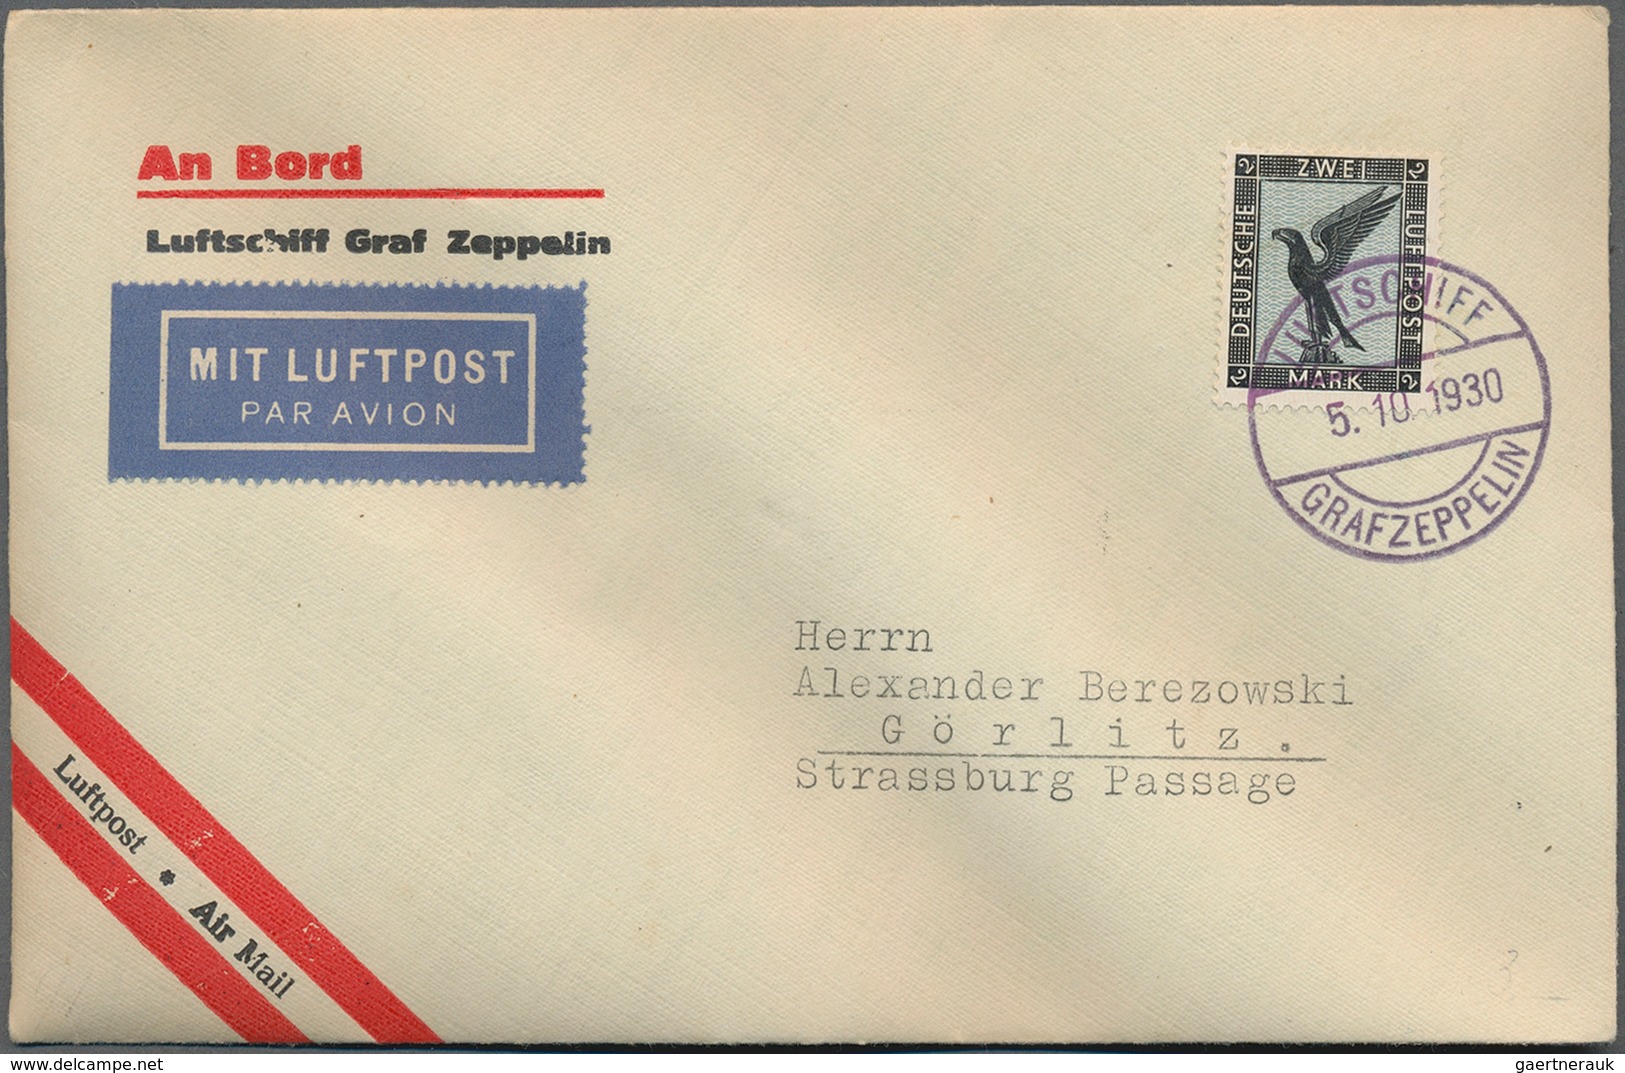 Zeppelinpost Deutschland: Collection of 71 Zeppelin cards and covers, ca 60 flown + several Hindenbu